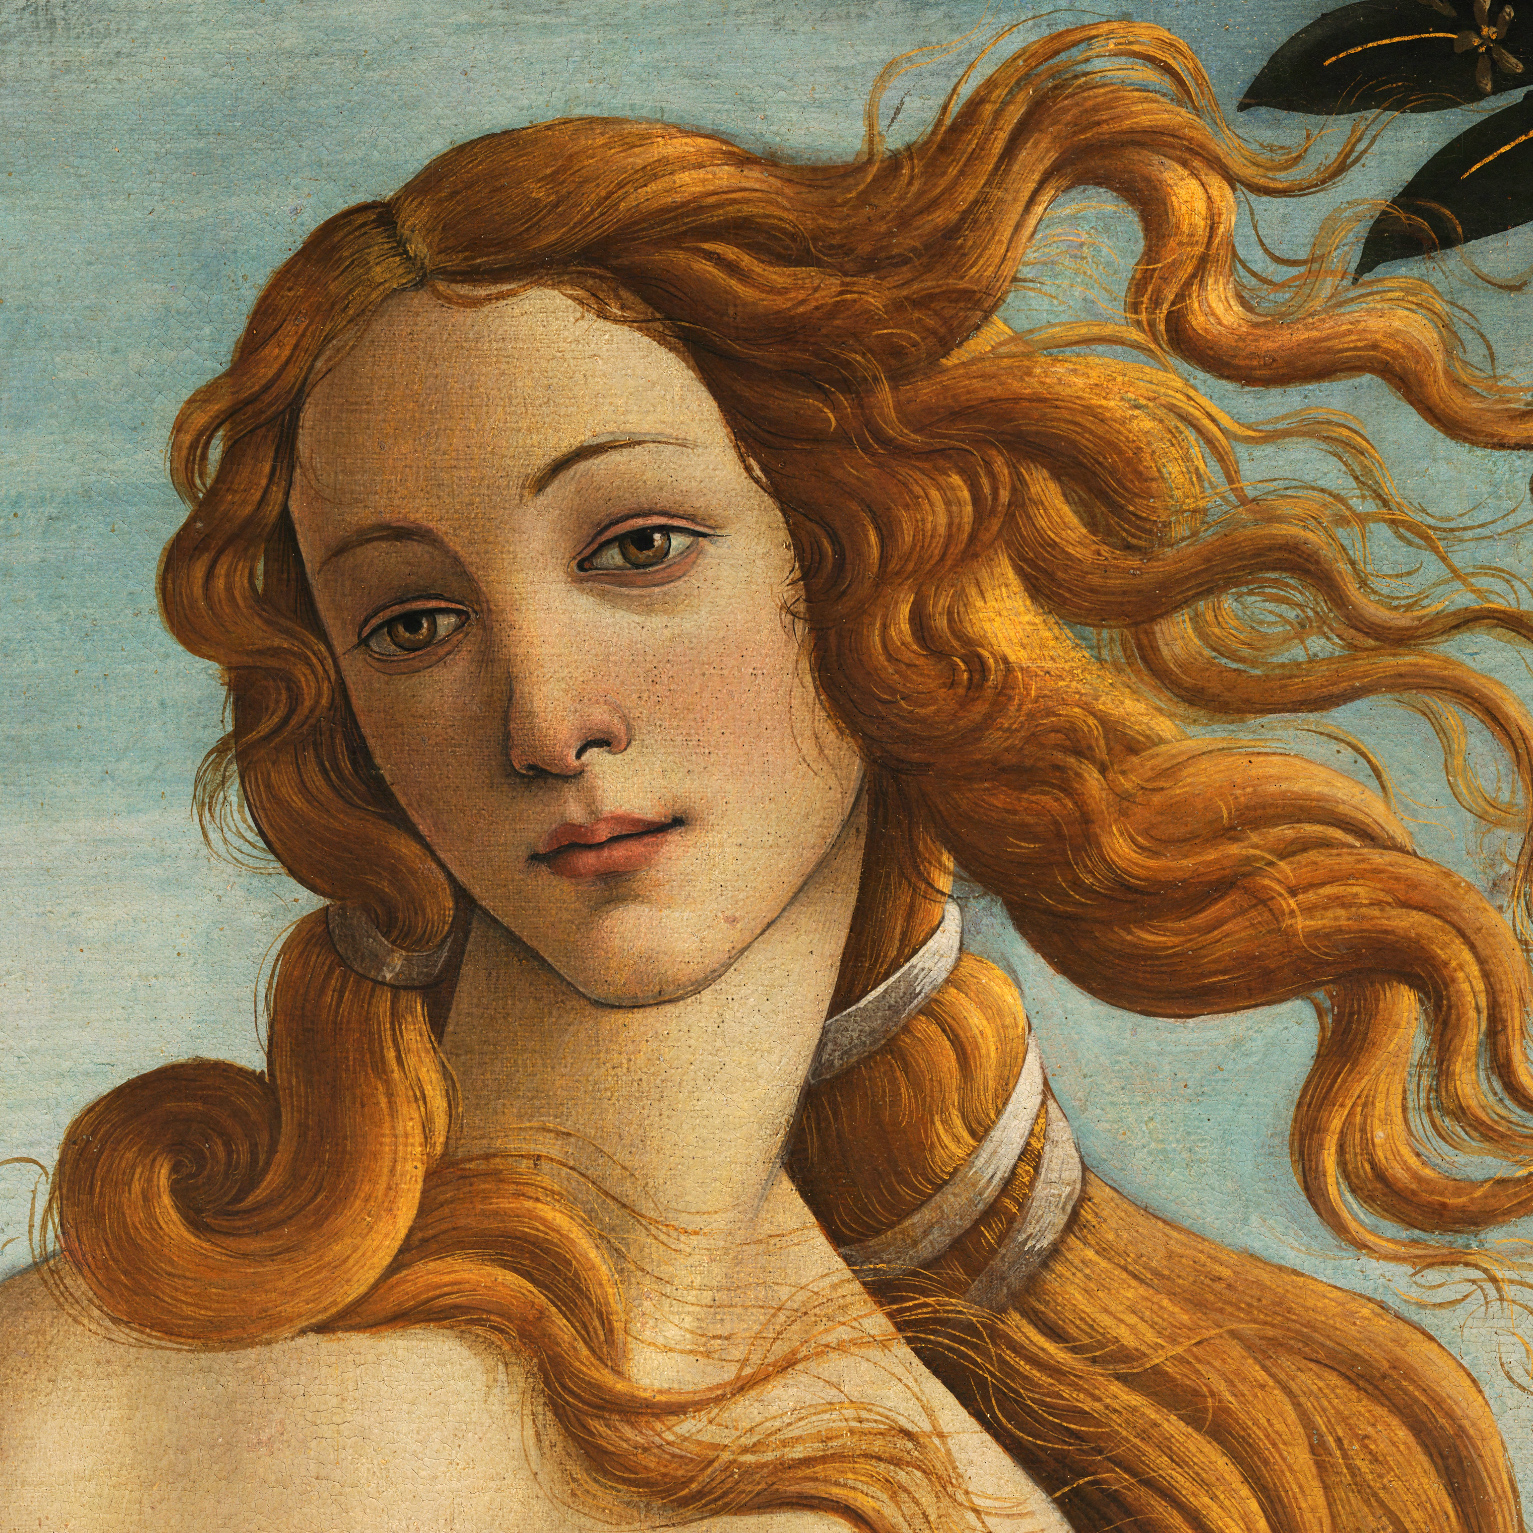 Venus (Sandro Botticelli) (Illustration) - Ancient History Encyclopedia